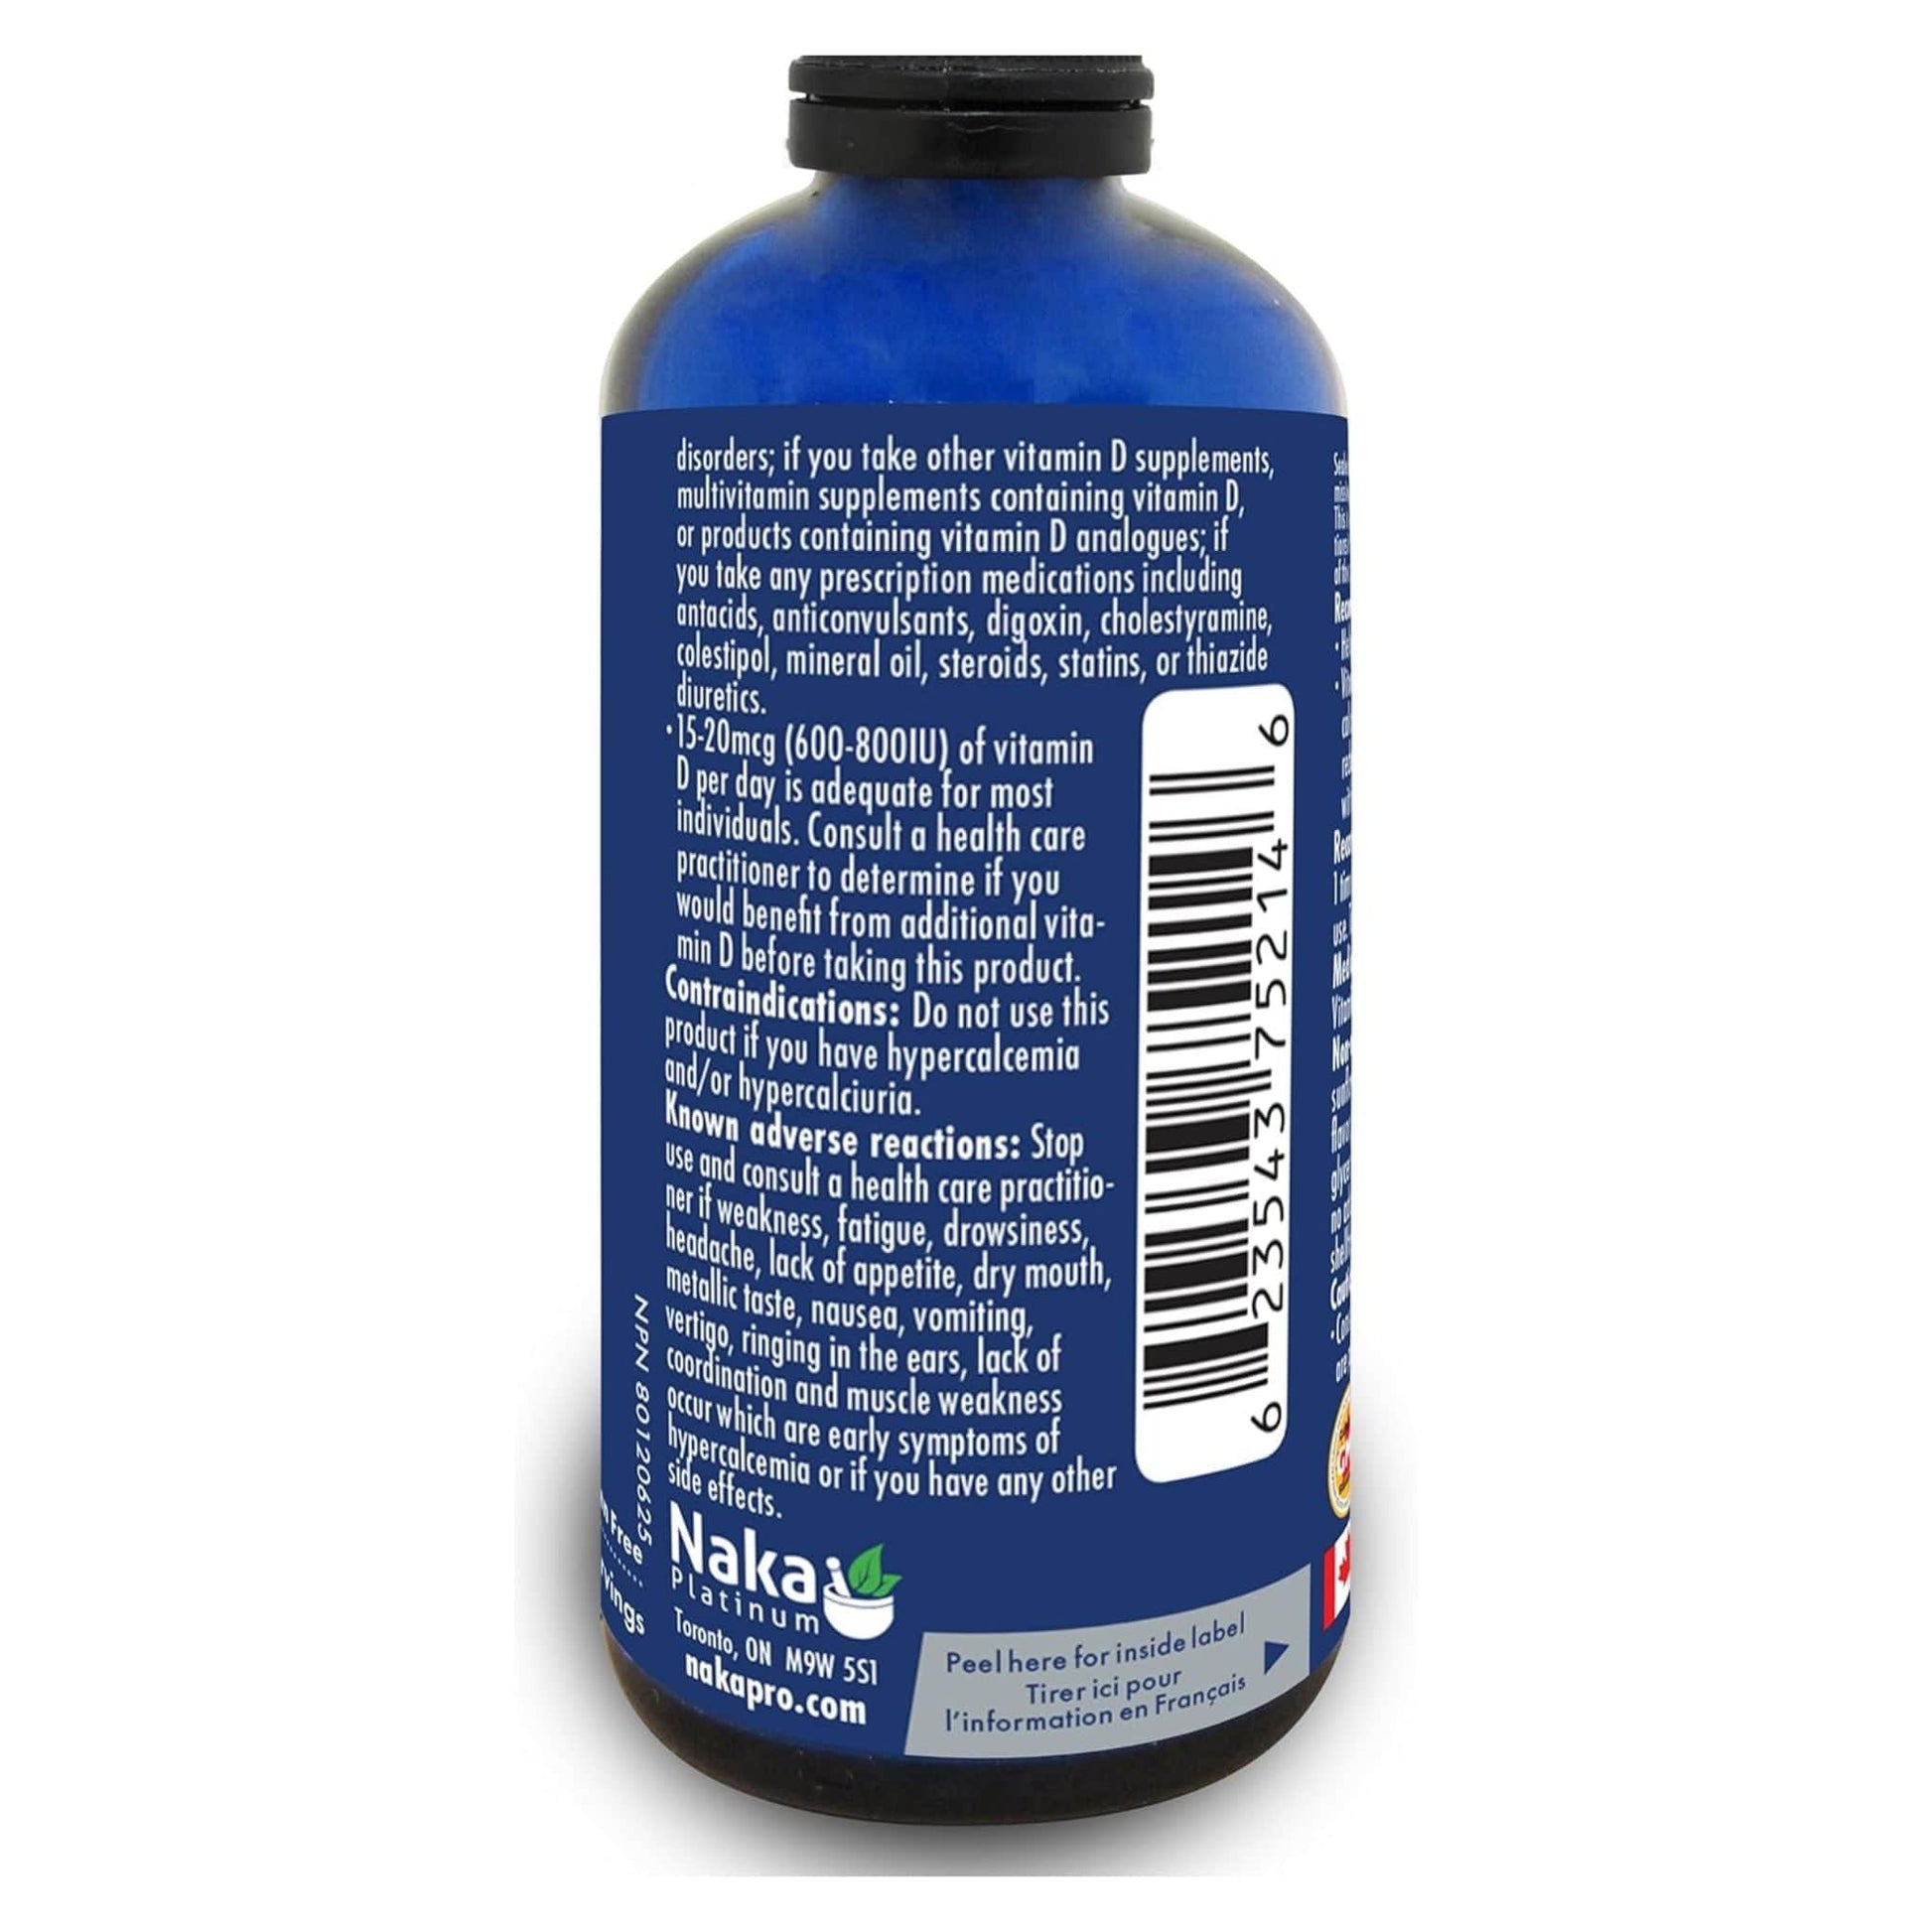 naka-platinum-lipsomal-d3-instant-bioavailability-2000-iu-drops-natural-lemon-flavour-100ml-833-servings-back-of-the-bottle-label